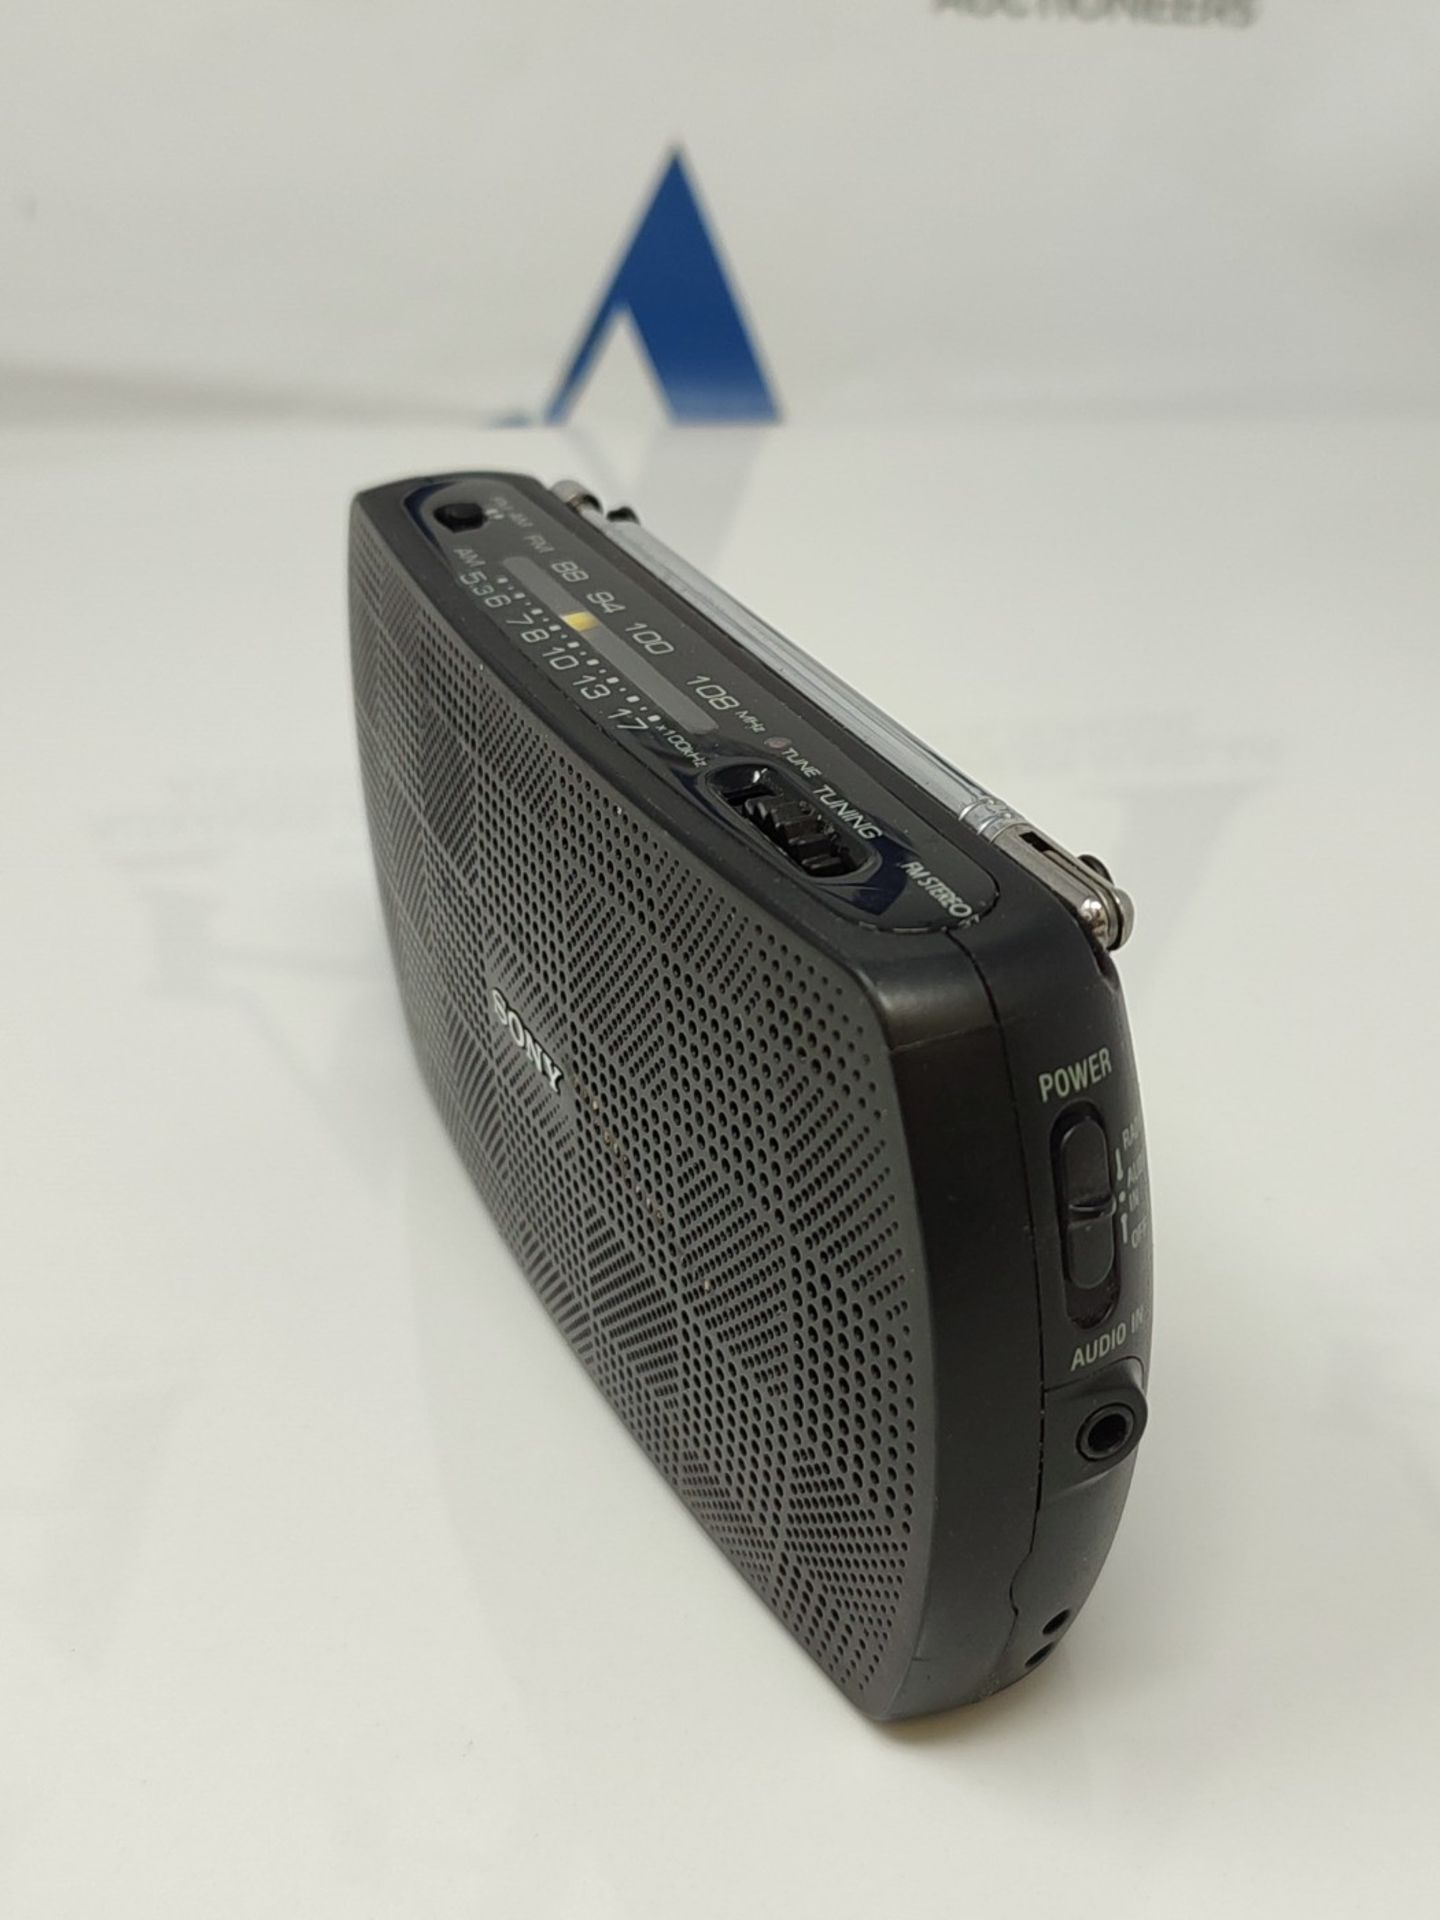 Sony SRF-18 AM/FM Portable Radio - Black - Image 2 of 2